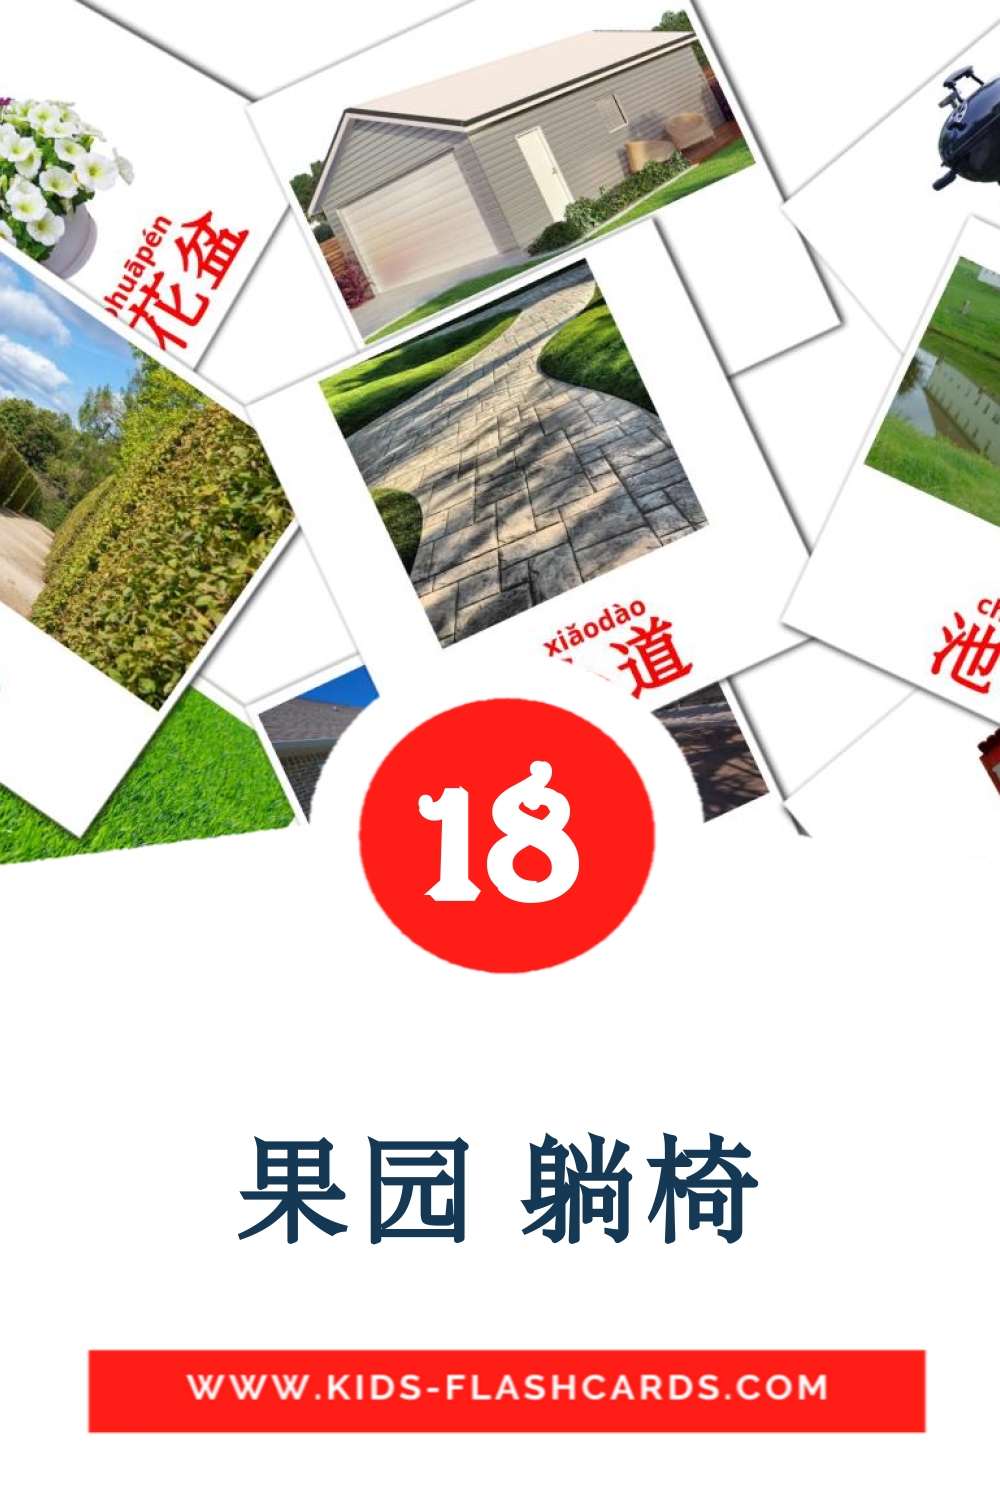 18 果园 躺椅 Bildkarten für den Kindergarten auf Chinesisch(Vereinfacht)